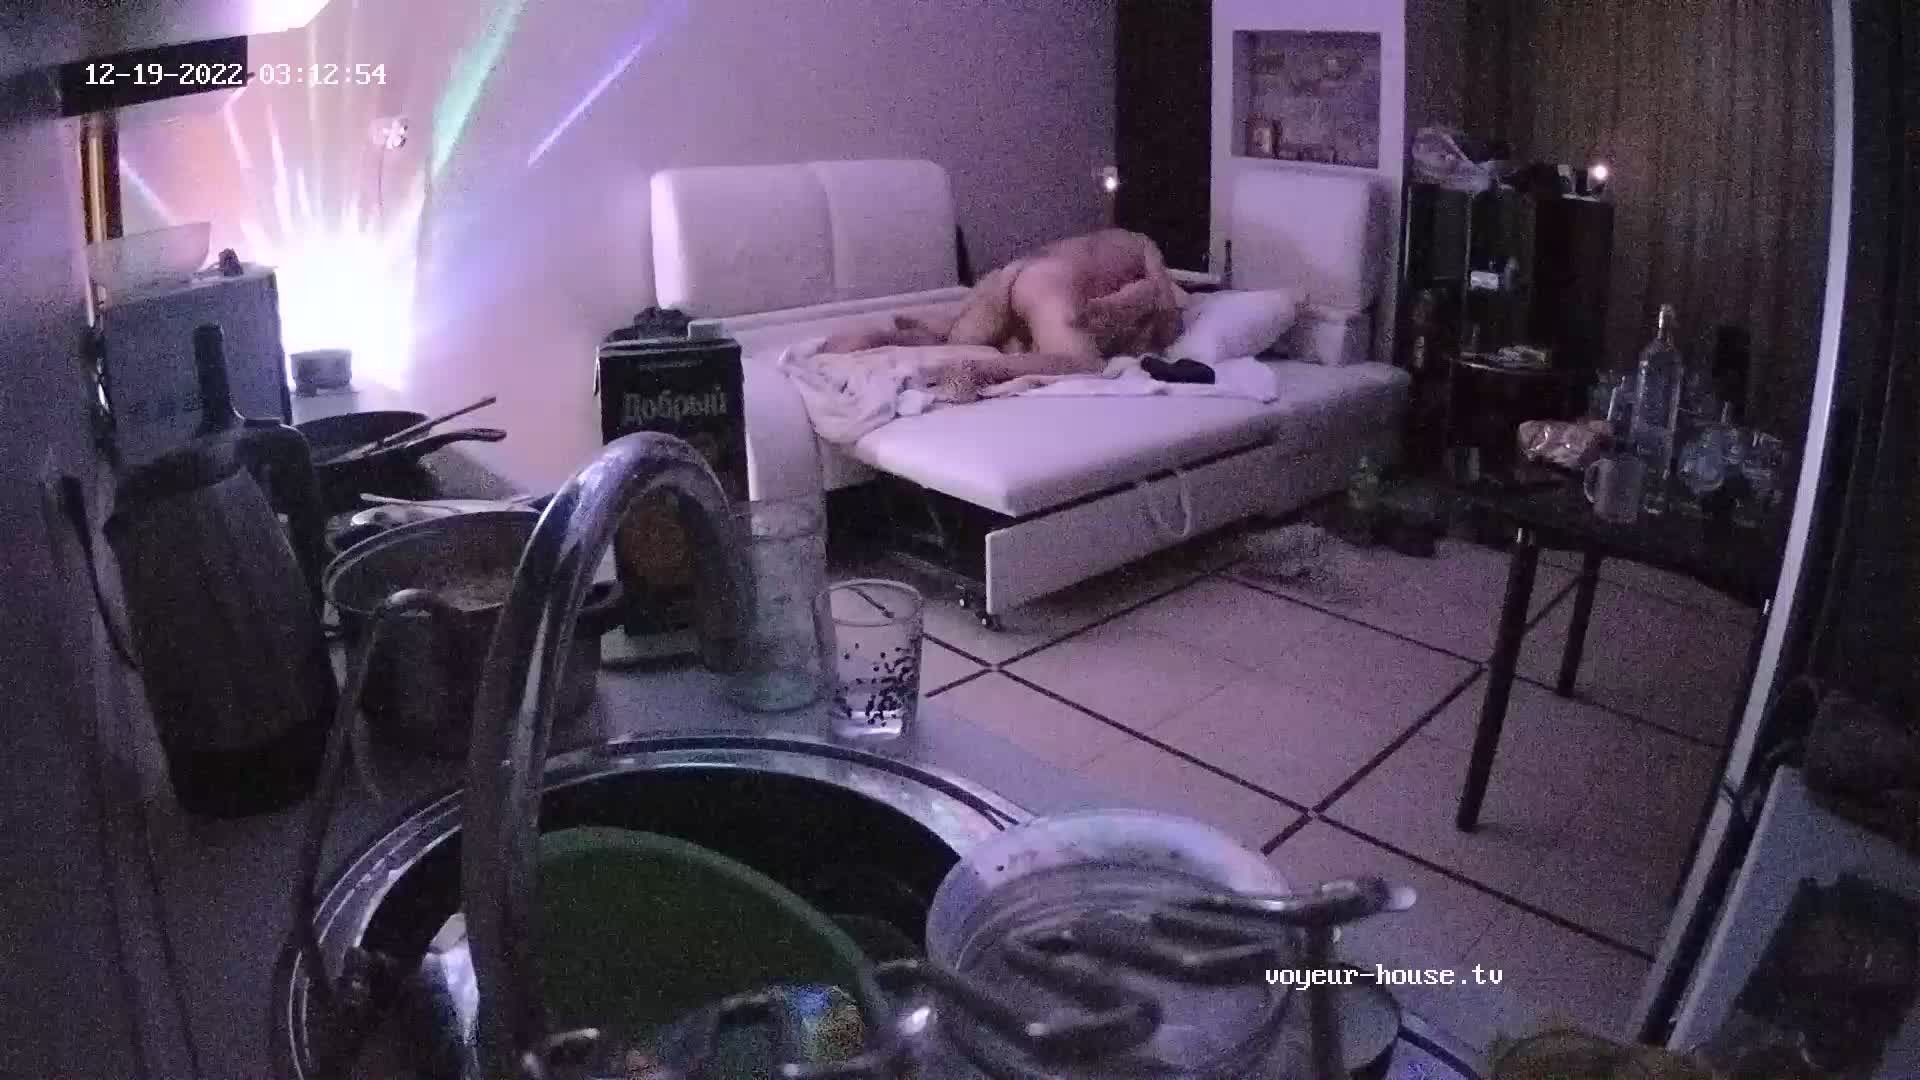 Ilvie & Ramon couch sex, Dec-19-2022